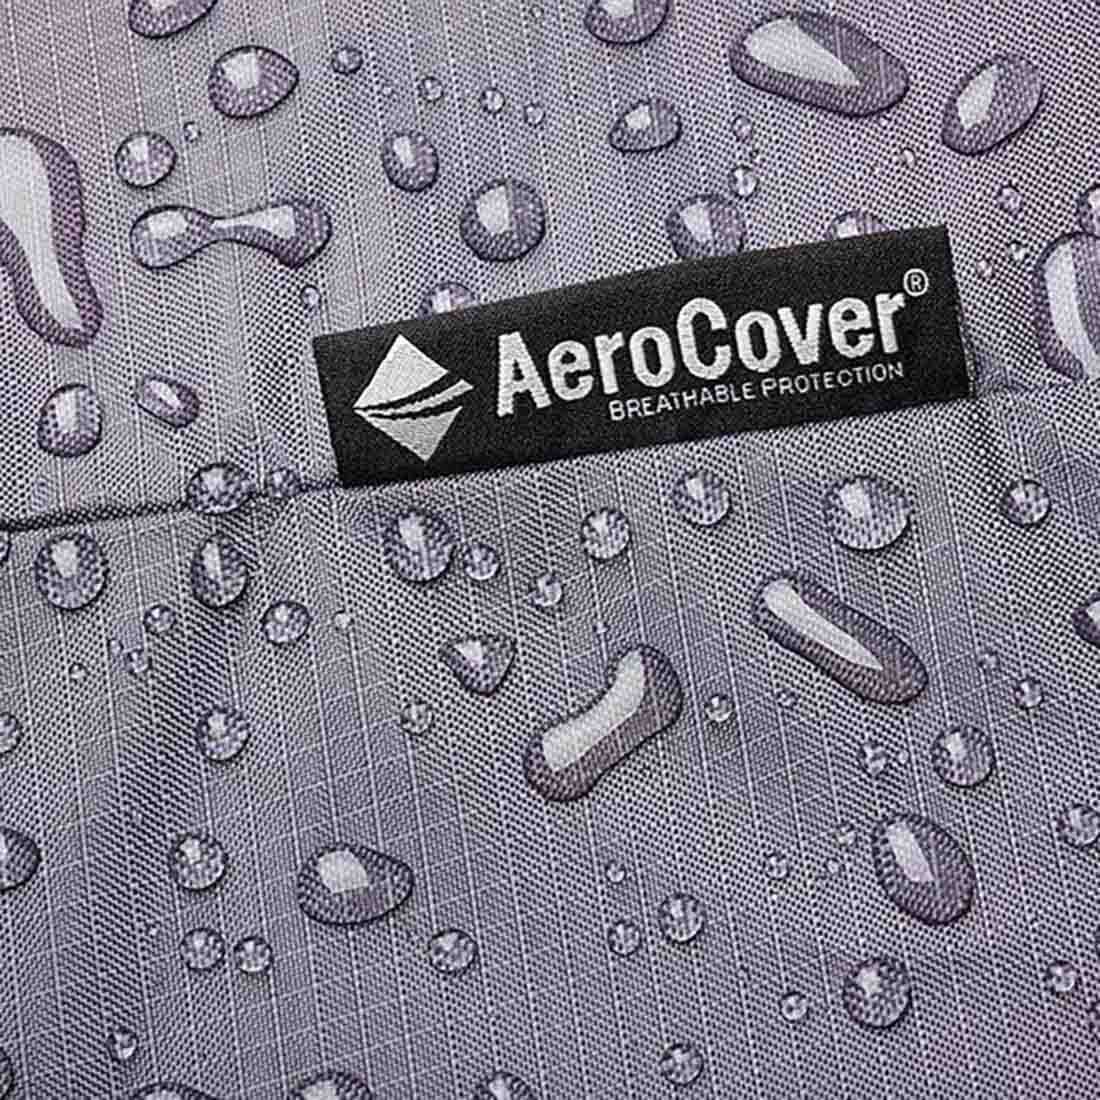 AeroCover Schutzhülle für Loungesofa 170x100x70cm Polyester